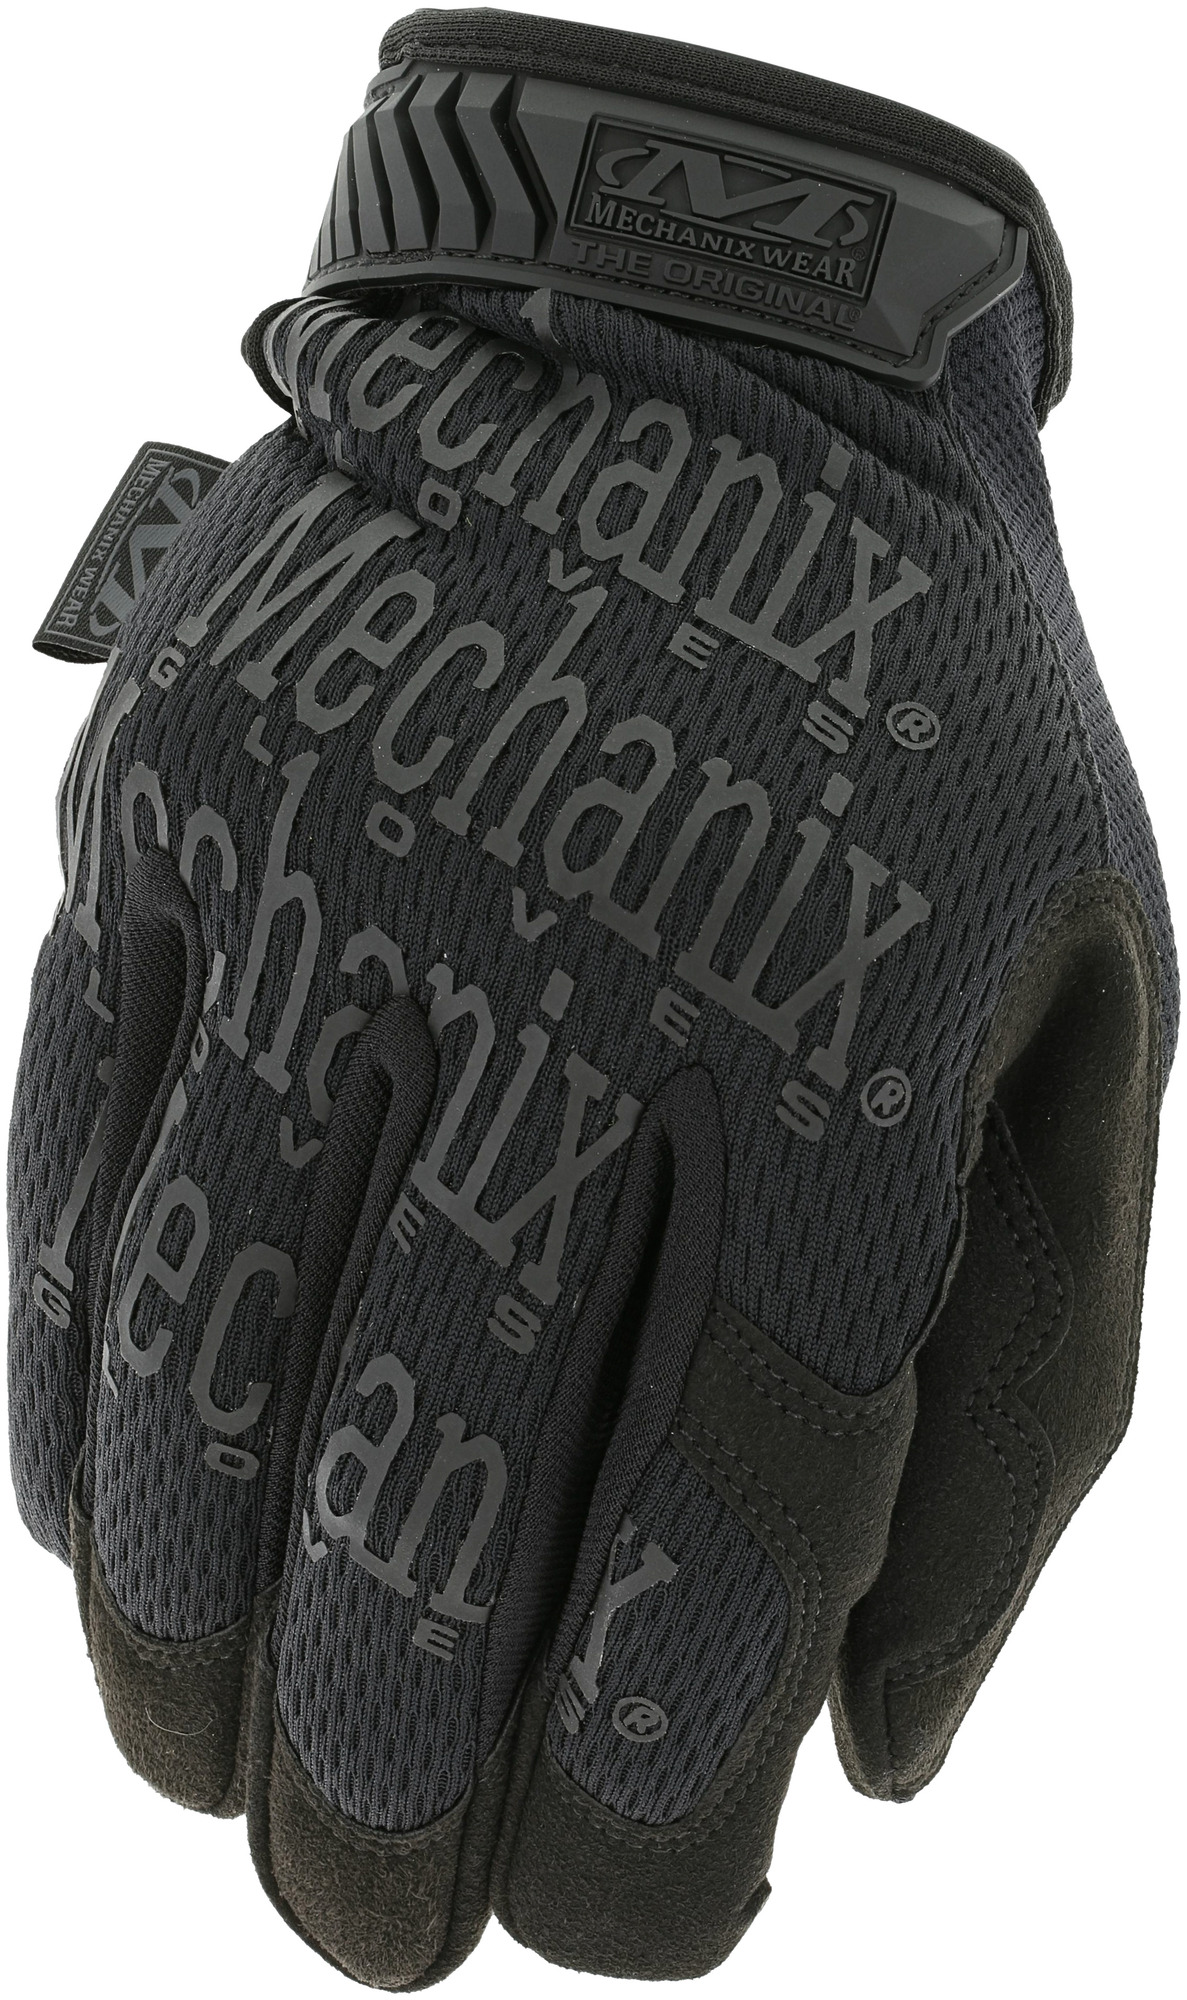 MECHANIX rukavice so syntetickou kožou Original - Covert - čierne XXL/12